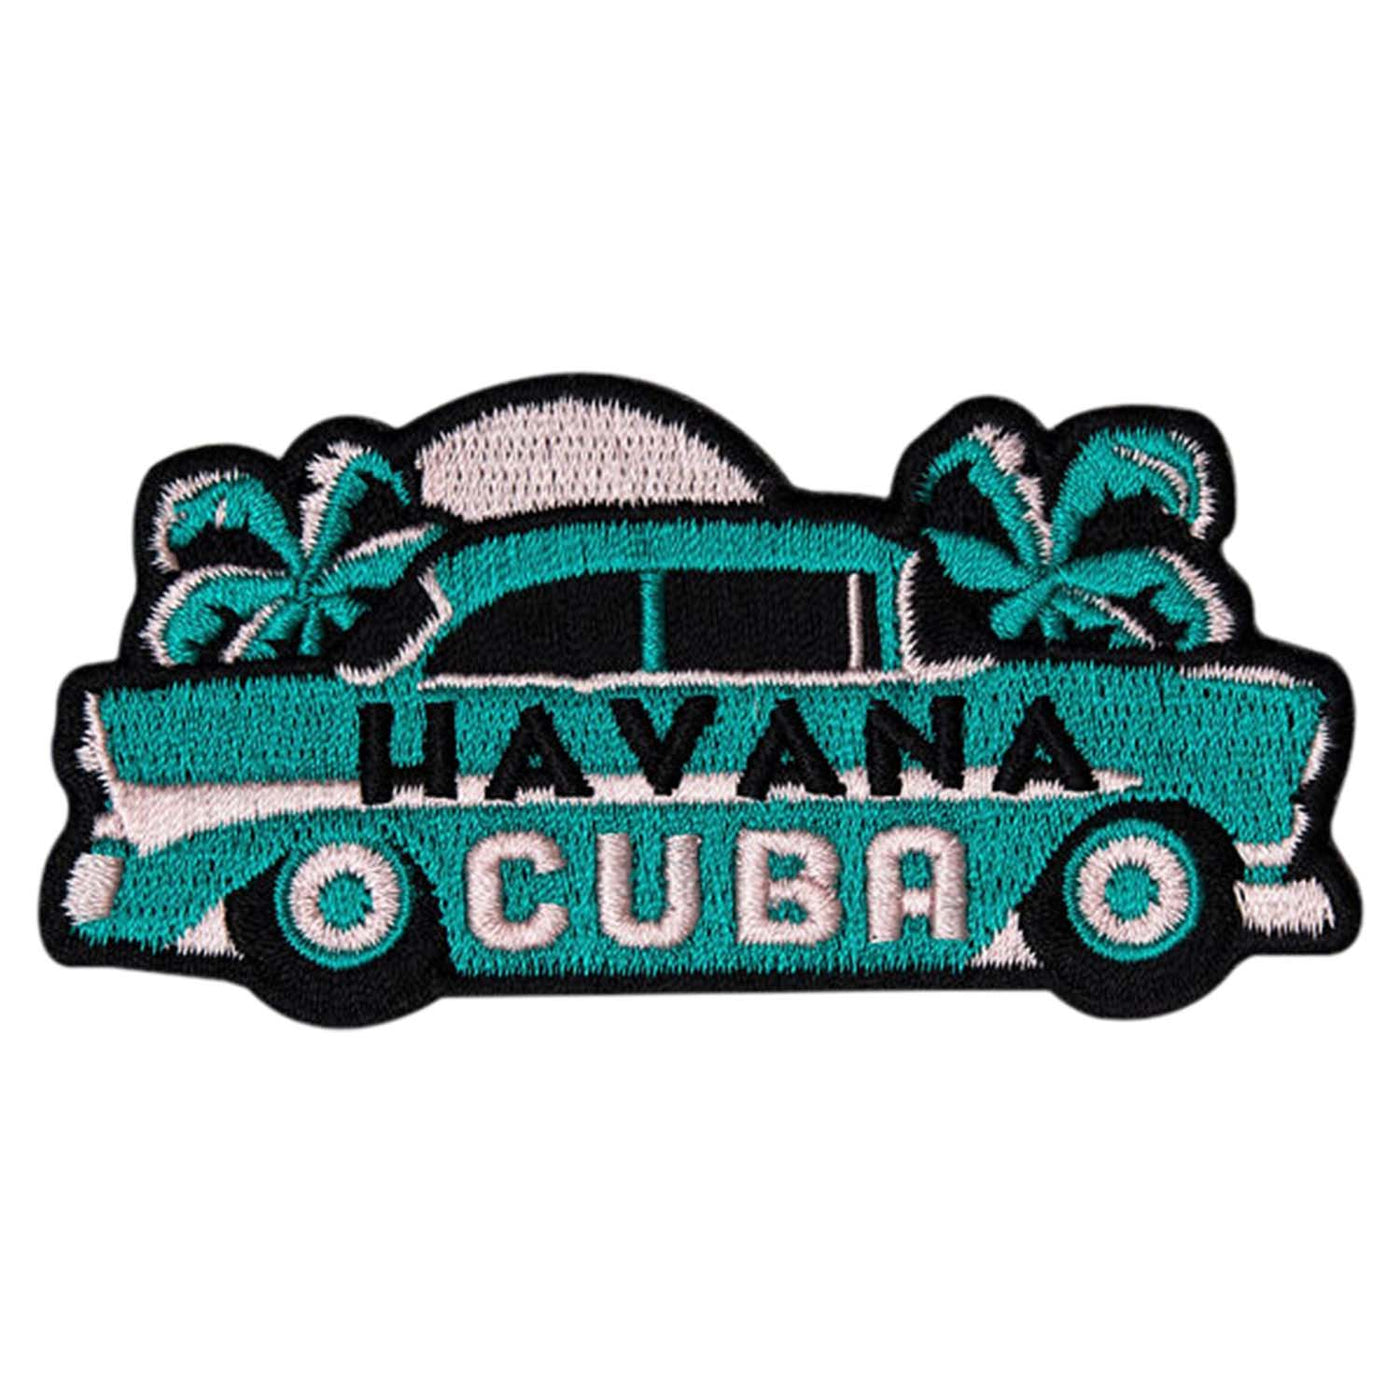 Havana Cuba Hook Patch